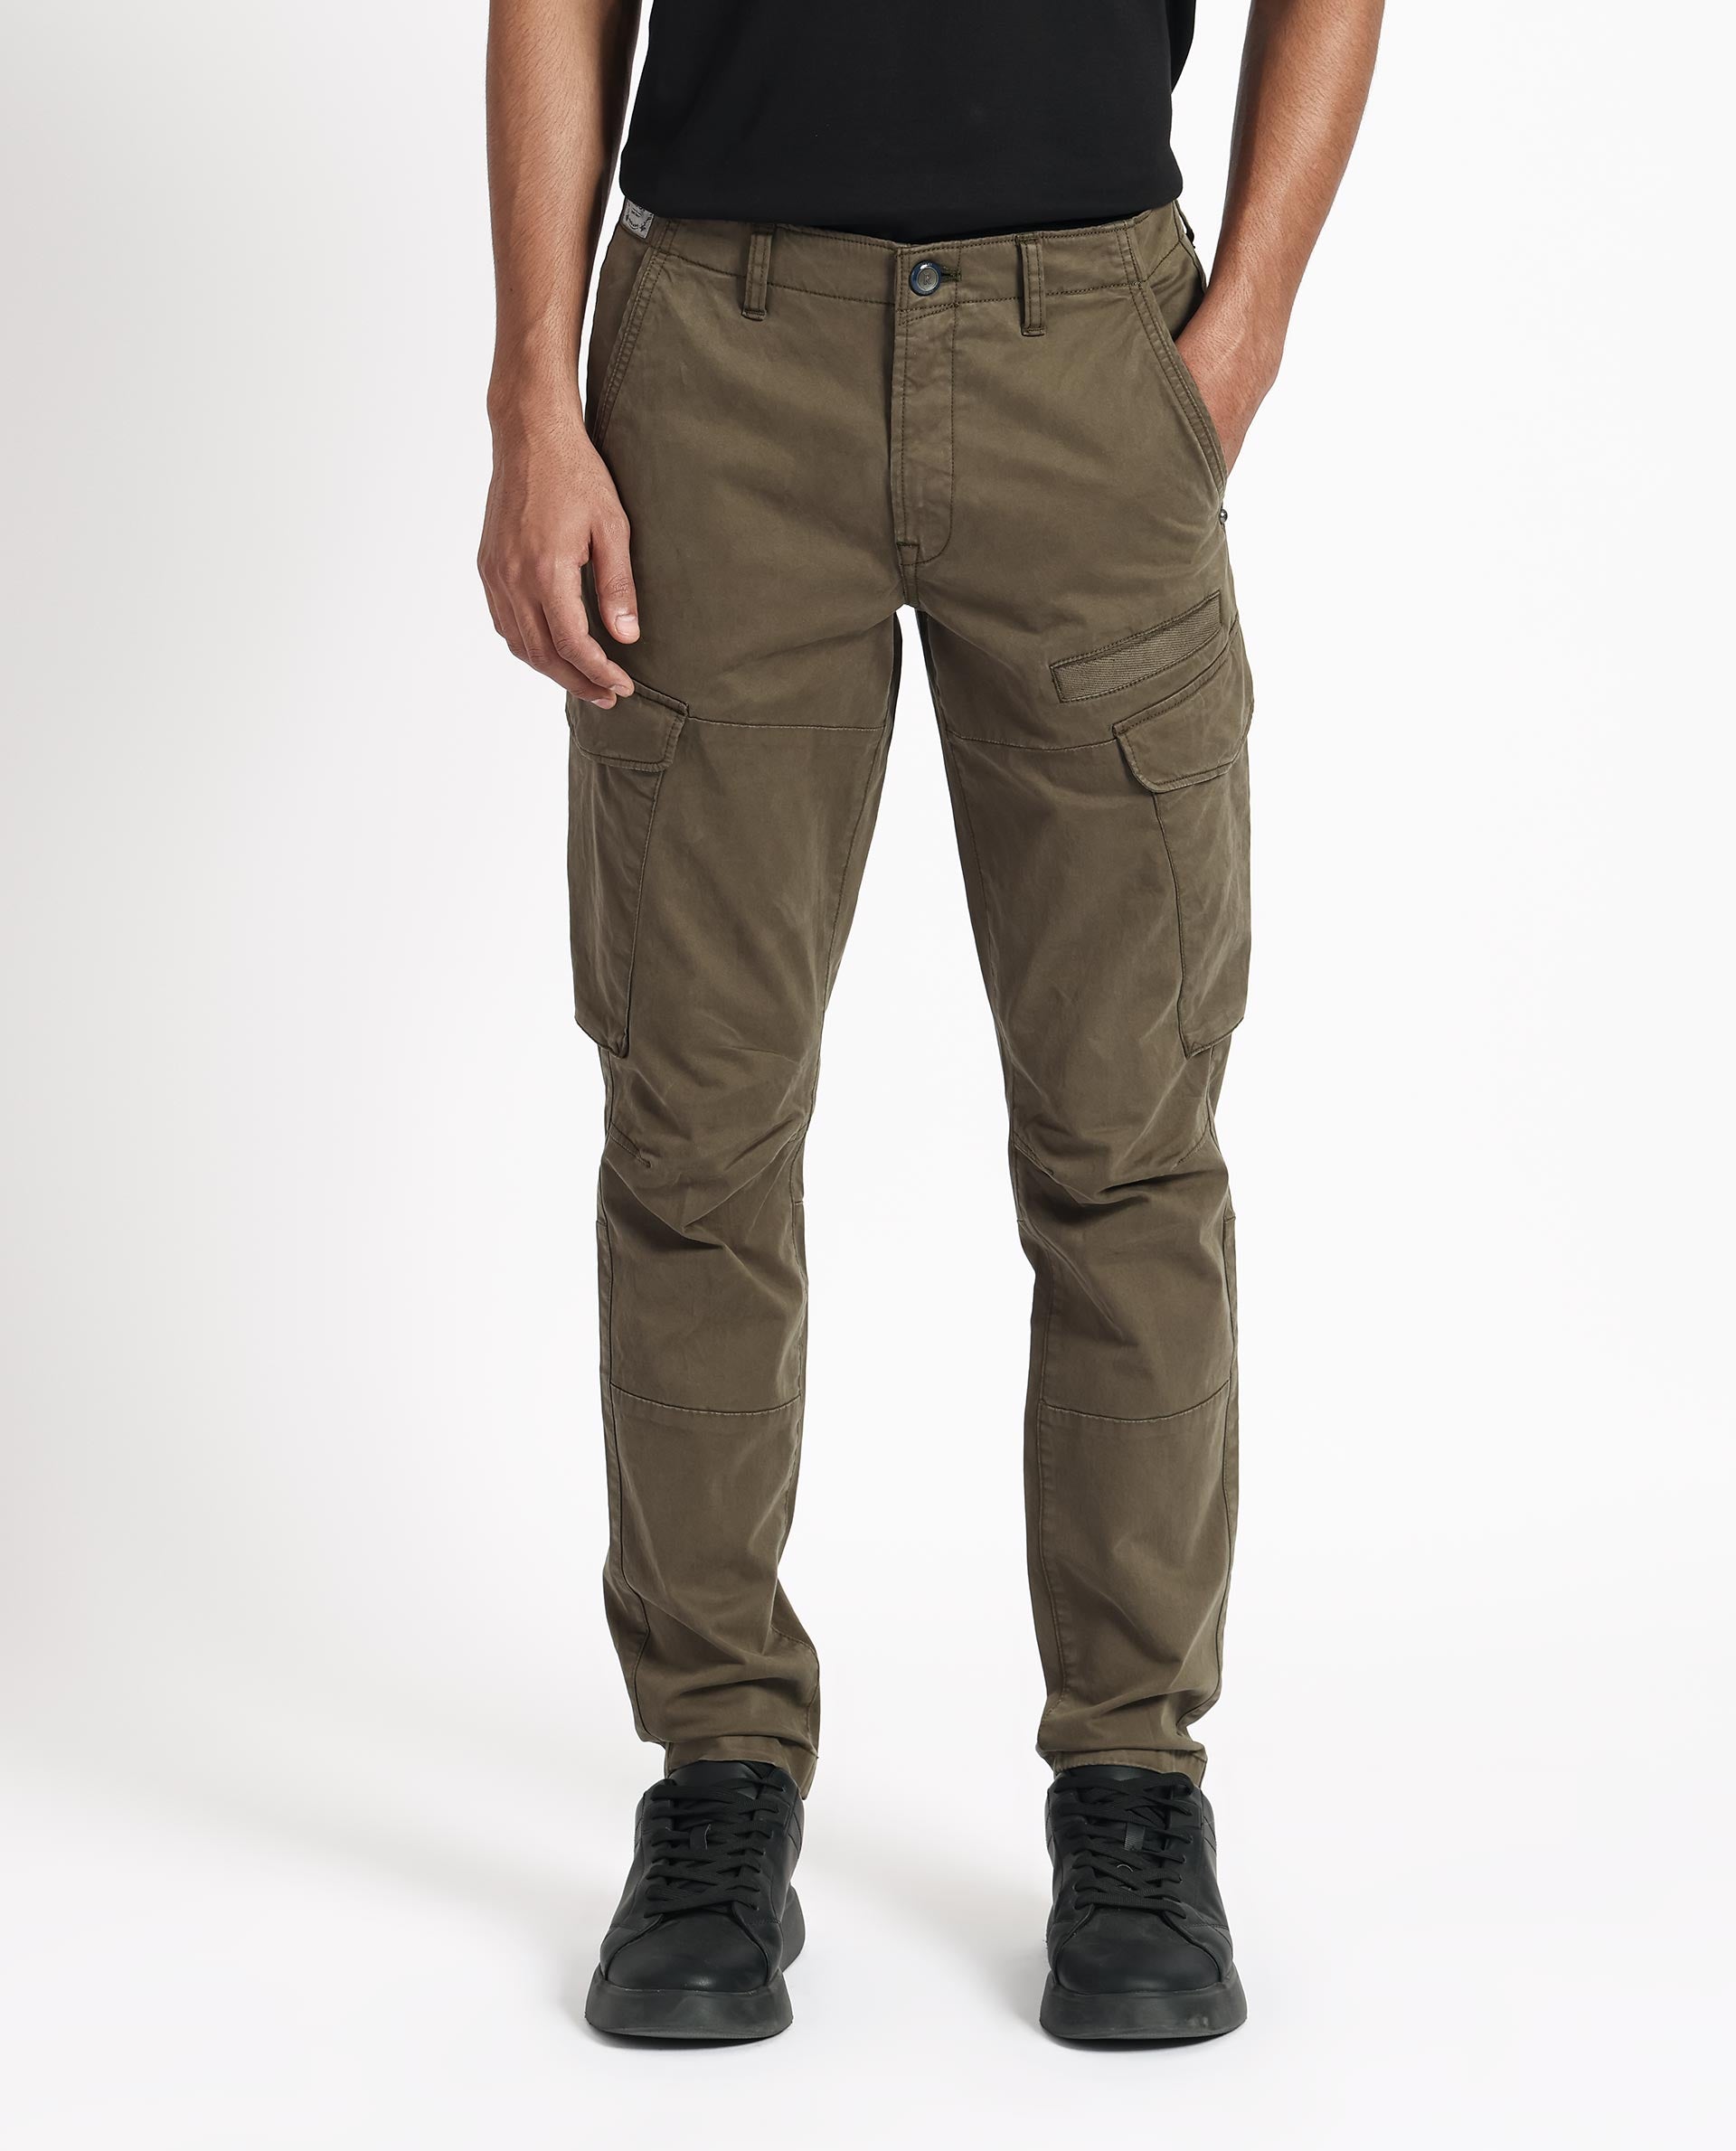 Men's Cargo Pants Cargo Pant With Stretch Solid Khaki Xxxl 